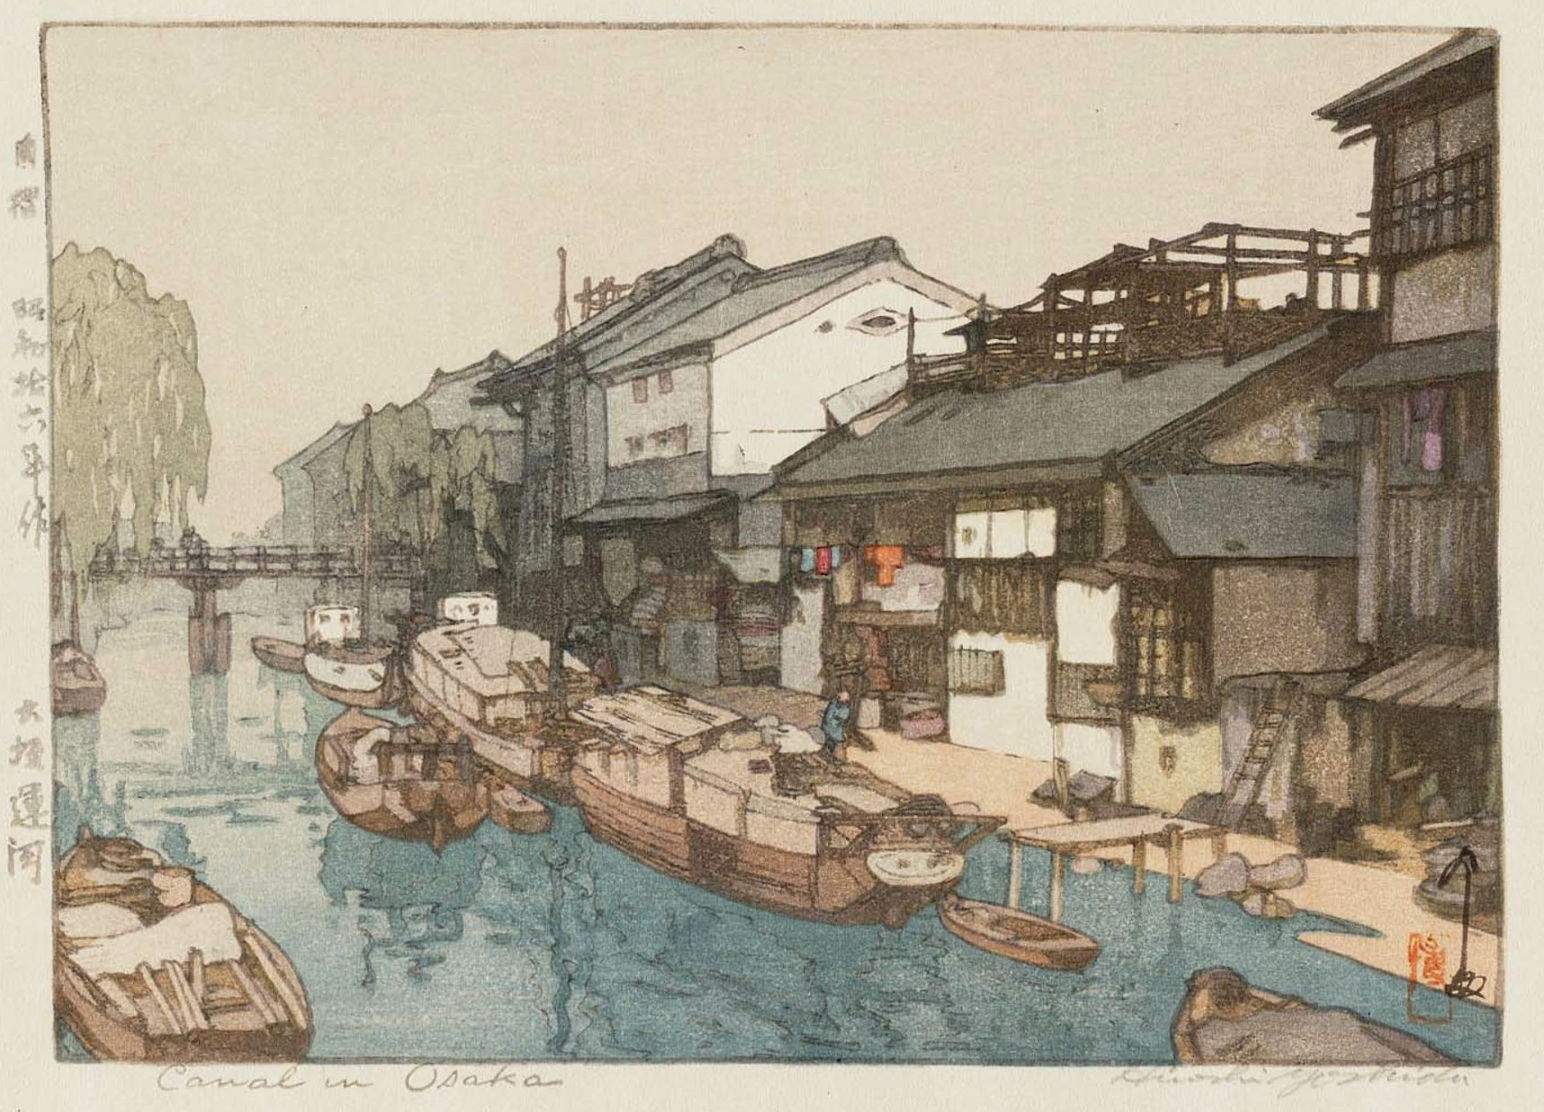 Hiroshi Yoshida “Canal in Osaka” 1941 woodblock print